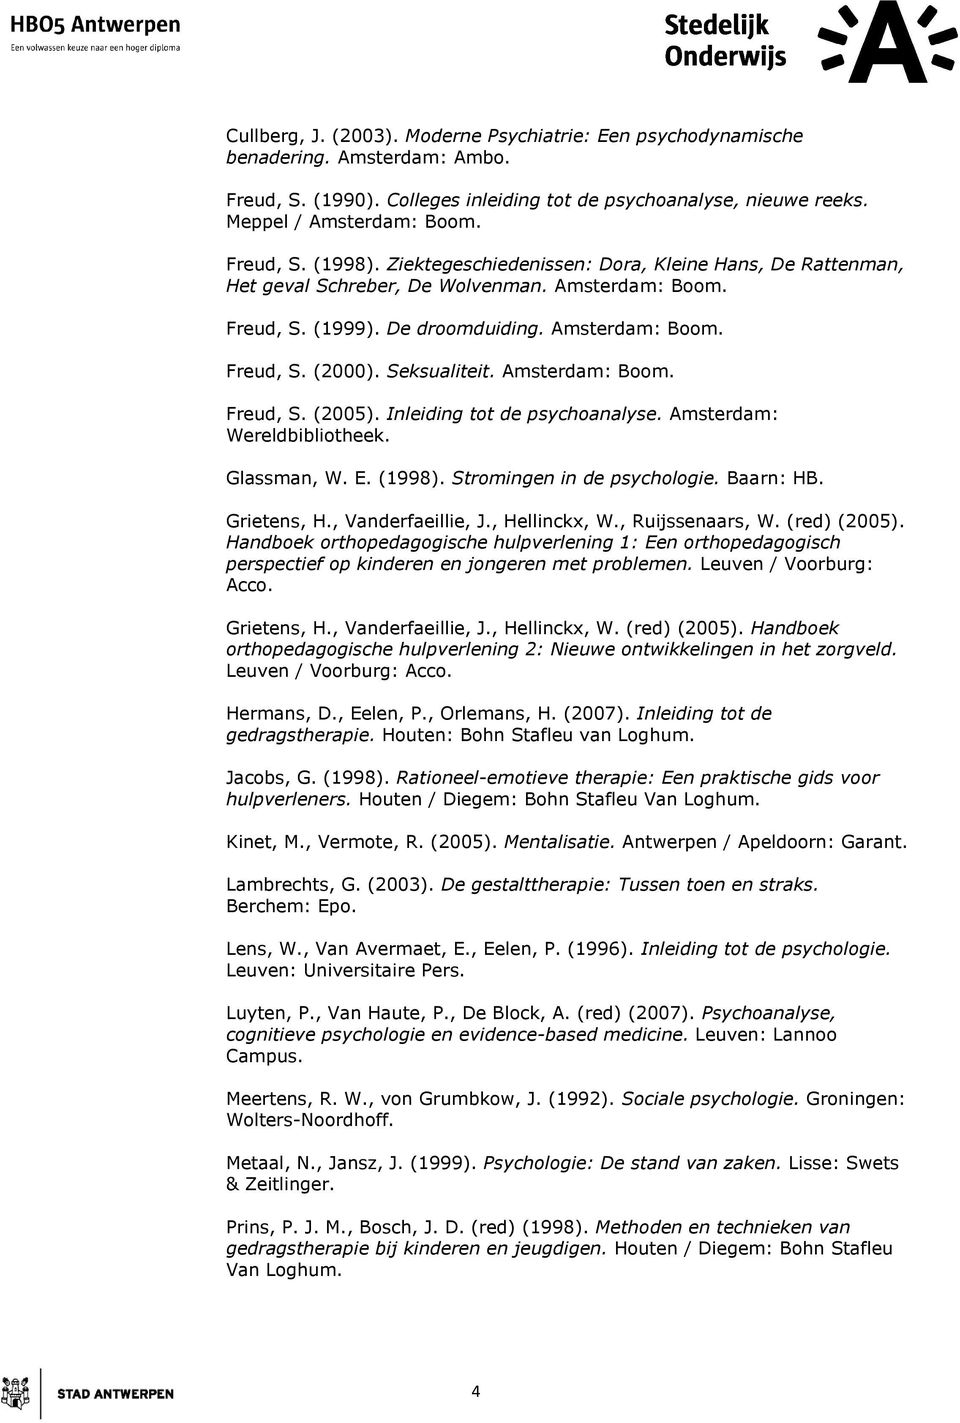 Amsterdam: Boom. Freud, S. (2005). Inleiding tot de psychoanalyse. Amsterdam: Wereldbibliotheek. Glassman, W. E. (1998). Stromingen in de psychologie. Baarn: HB. Grietens, H., Vanderfaeillie, J.